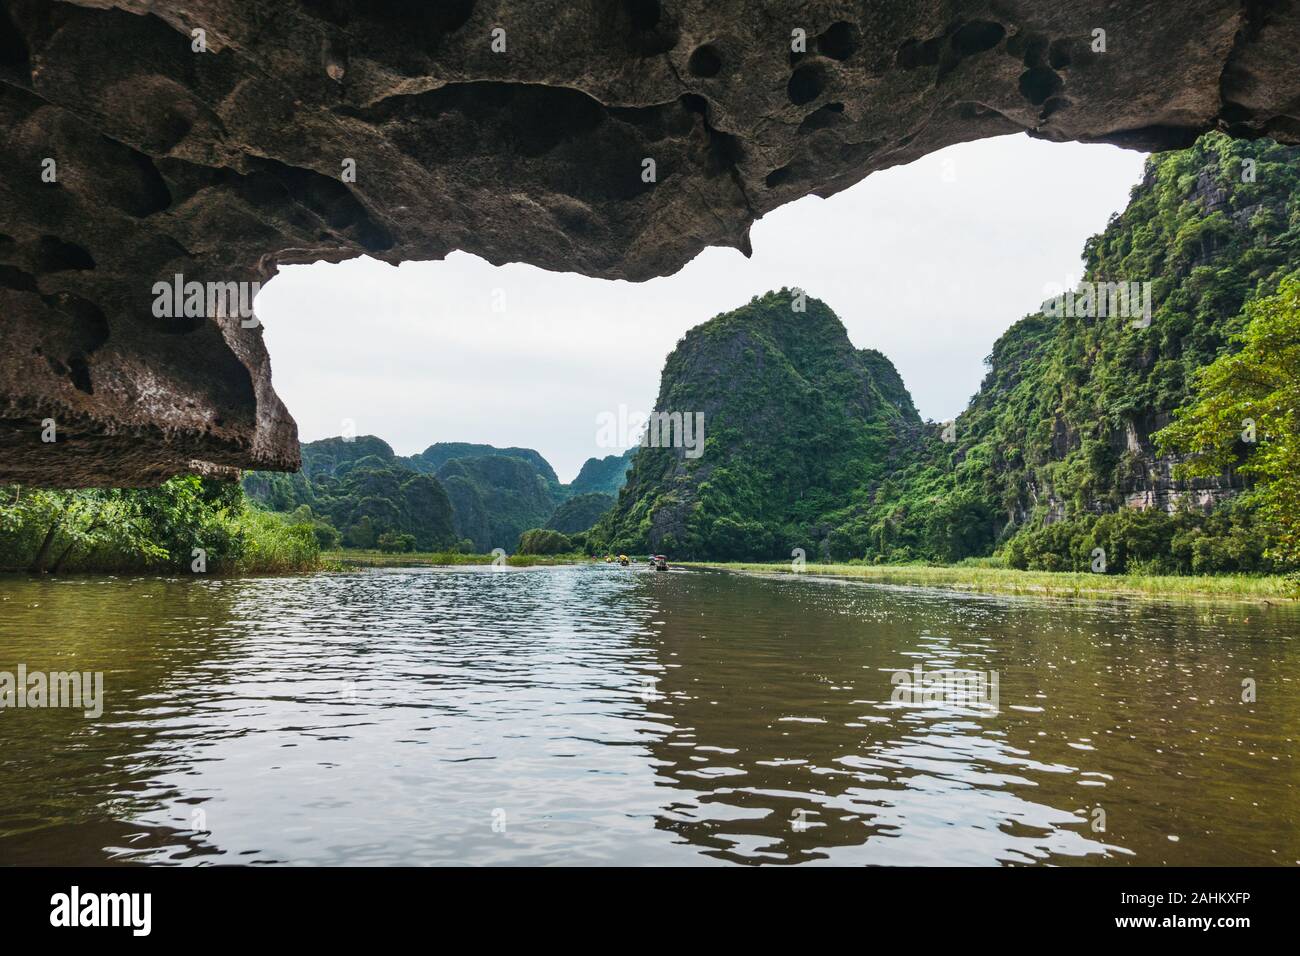 A la deriva en cuevas de piedra caliza en el tour en barco a través de la ONG Río Dong, Tam Coc, provincia de Ninh Binh, Vietnam Foto de stock